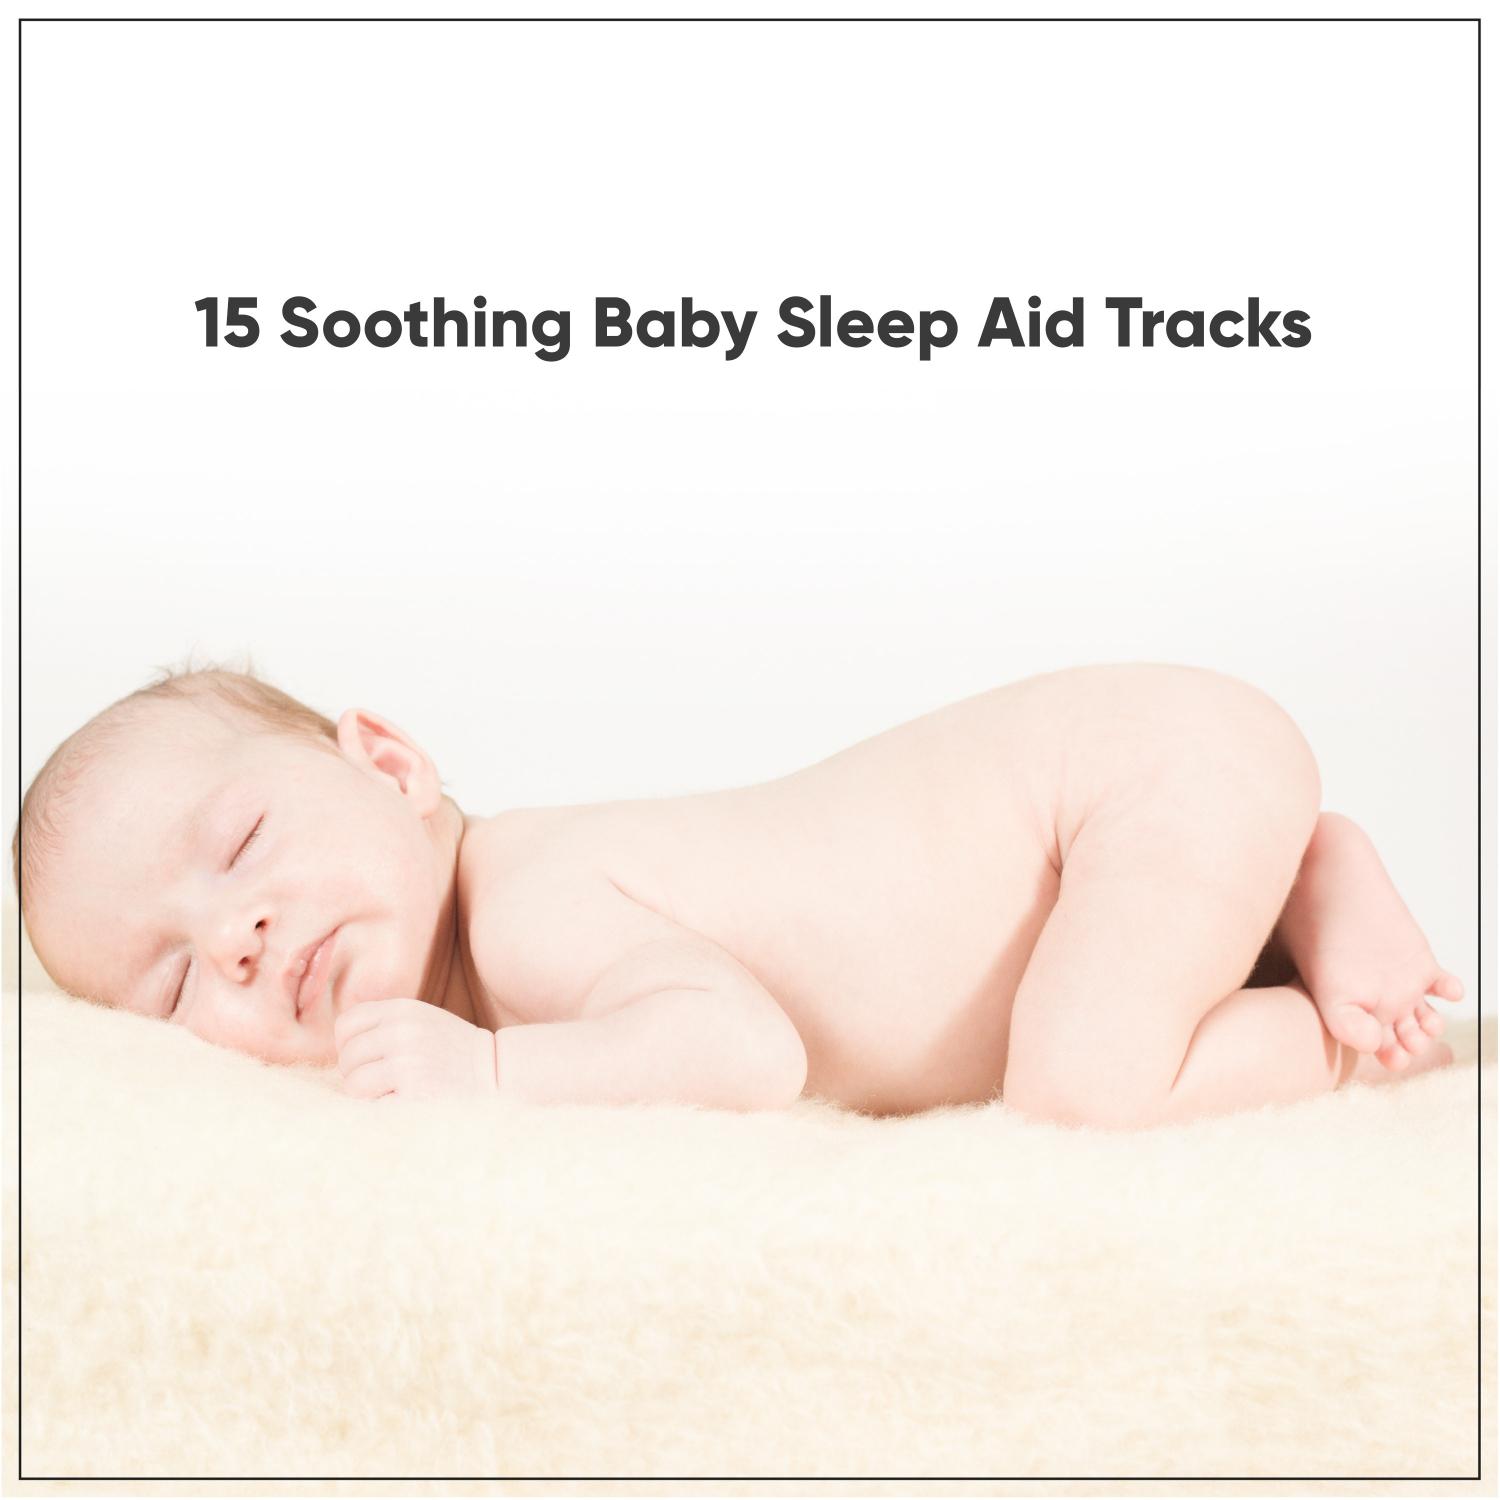 15 Soothing Baby Sleep Aid Tracks: Natural, Gentle Rain